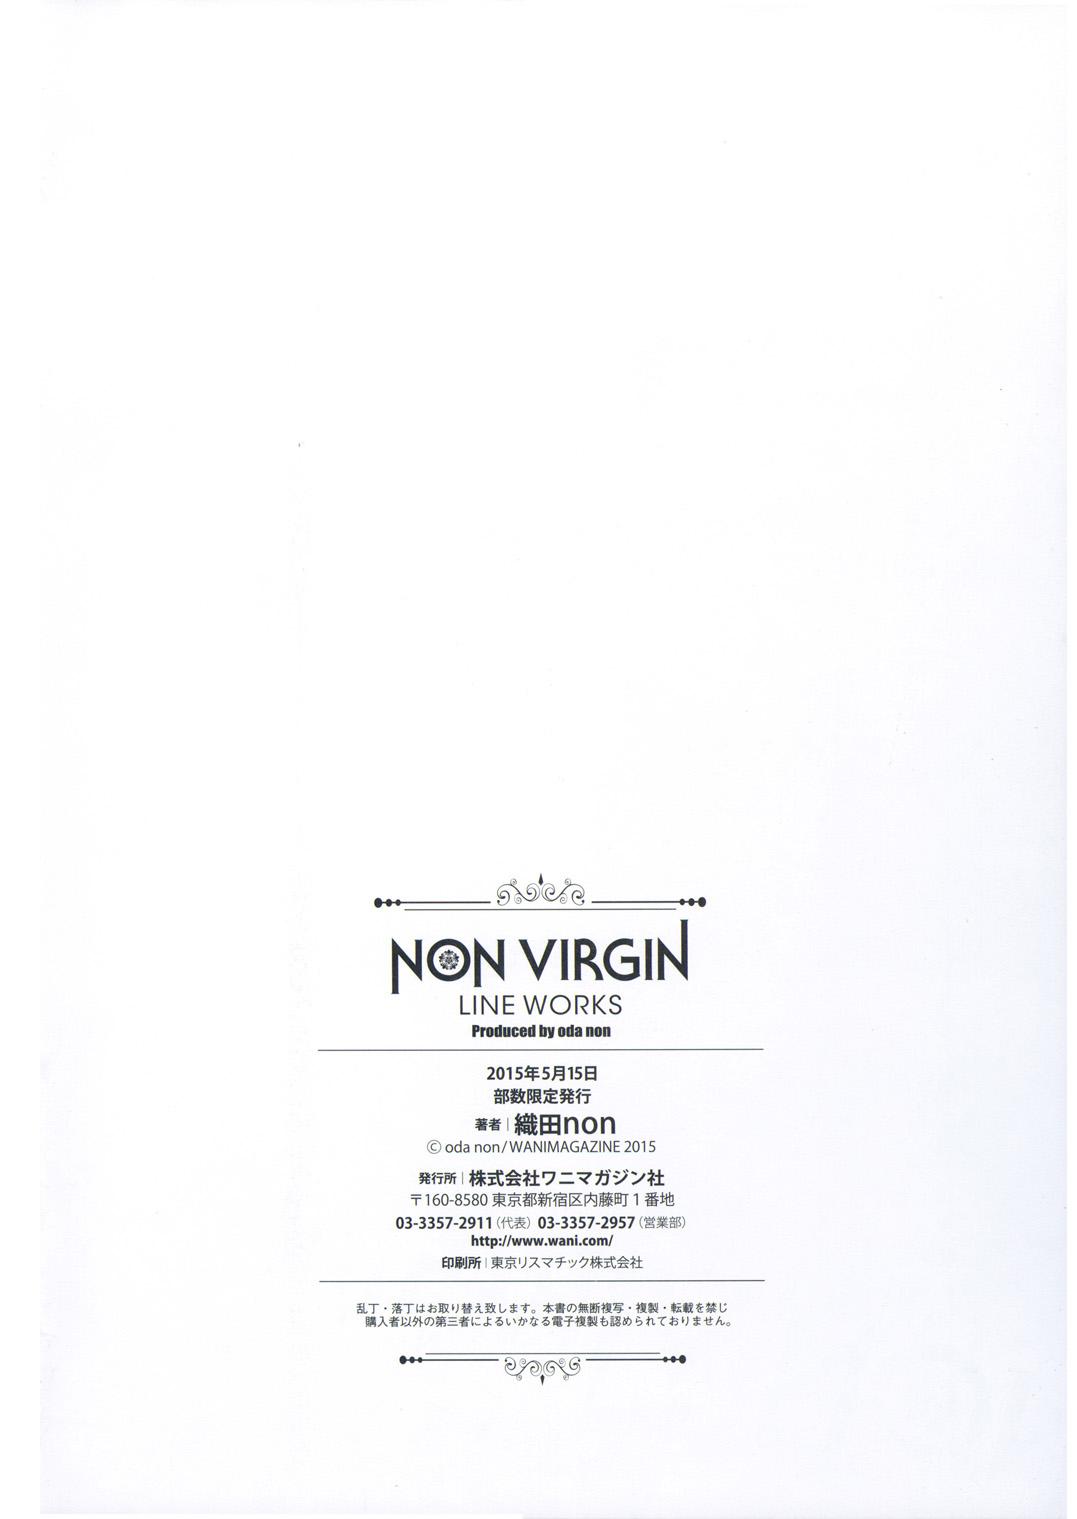 [Oda Non] NON VIRGIN 【Limited Edition】 CHRONICLE-FULLCOLOR BOOKLET-SIDE:MELON + NON VIRGIN LINE WORKS + Postcard 111